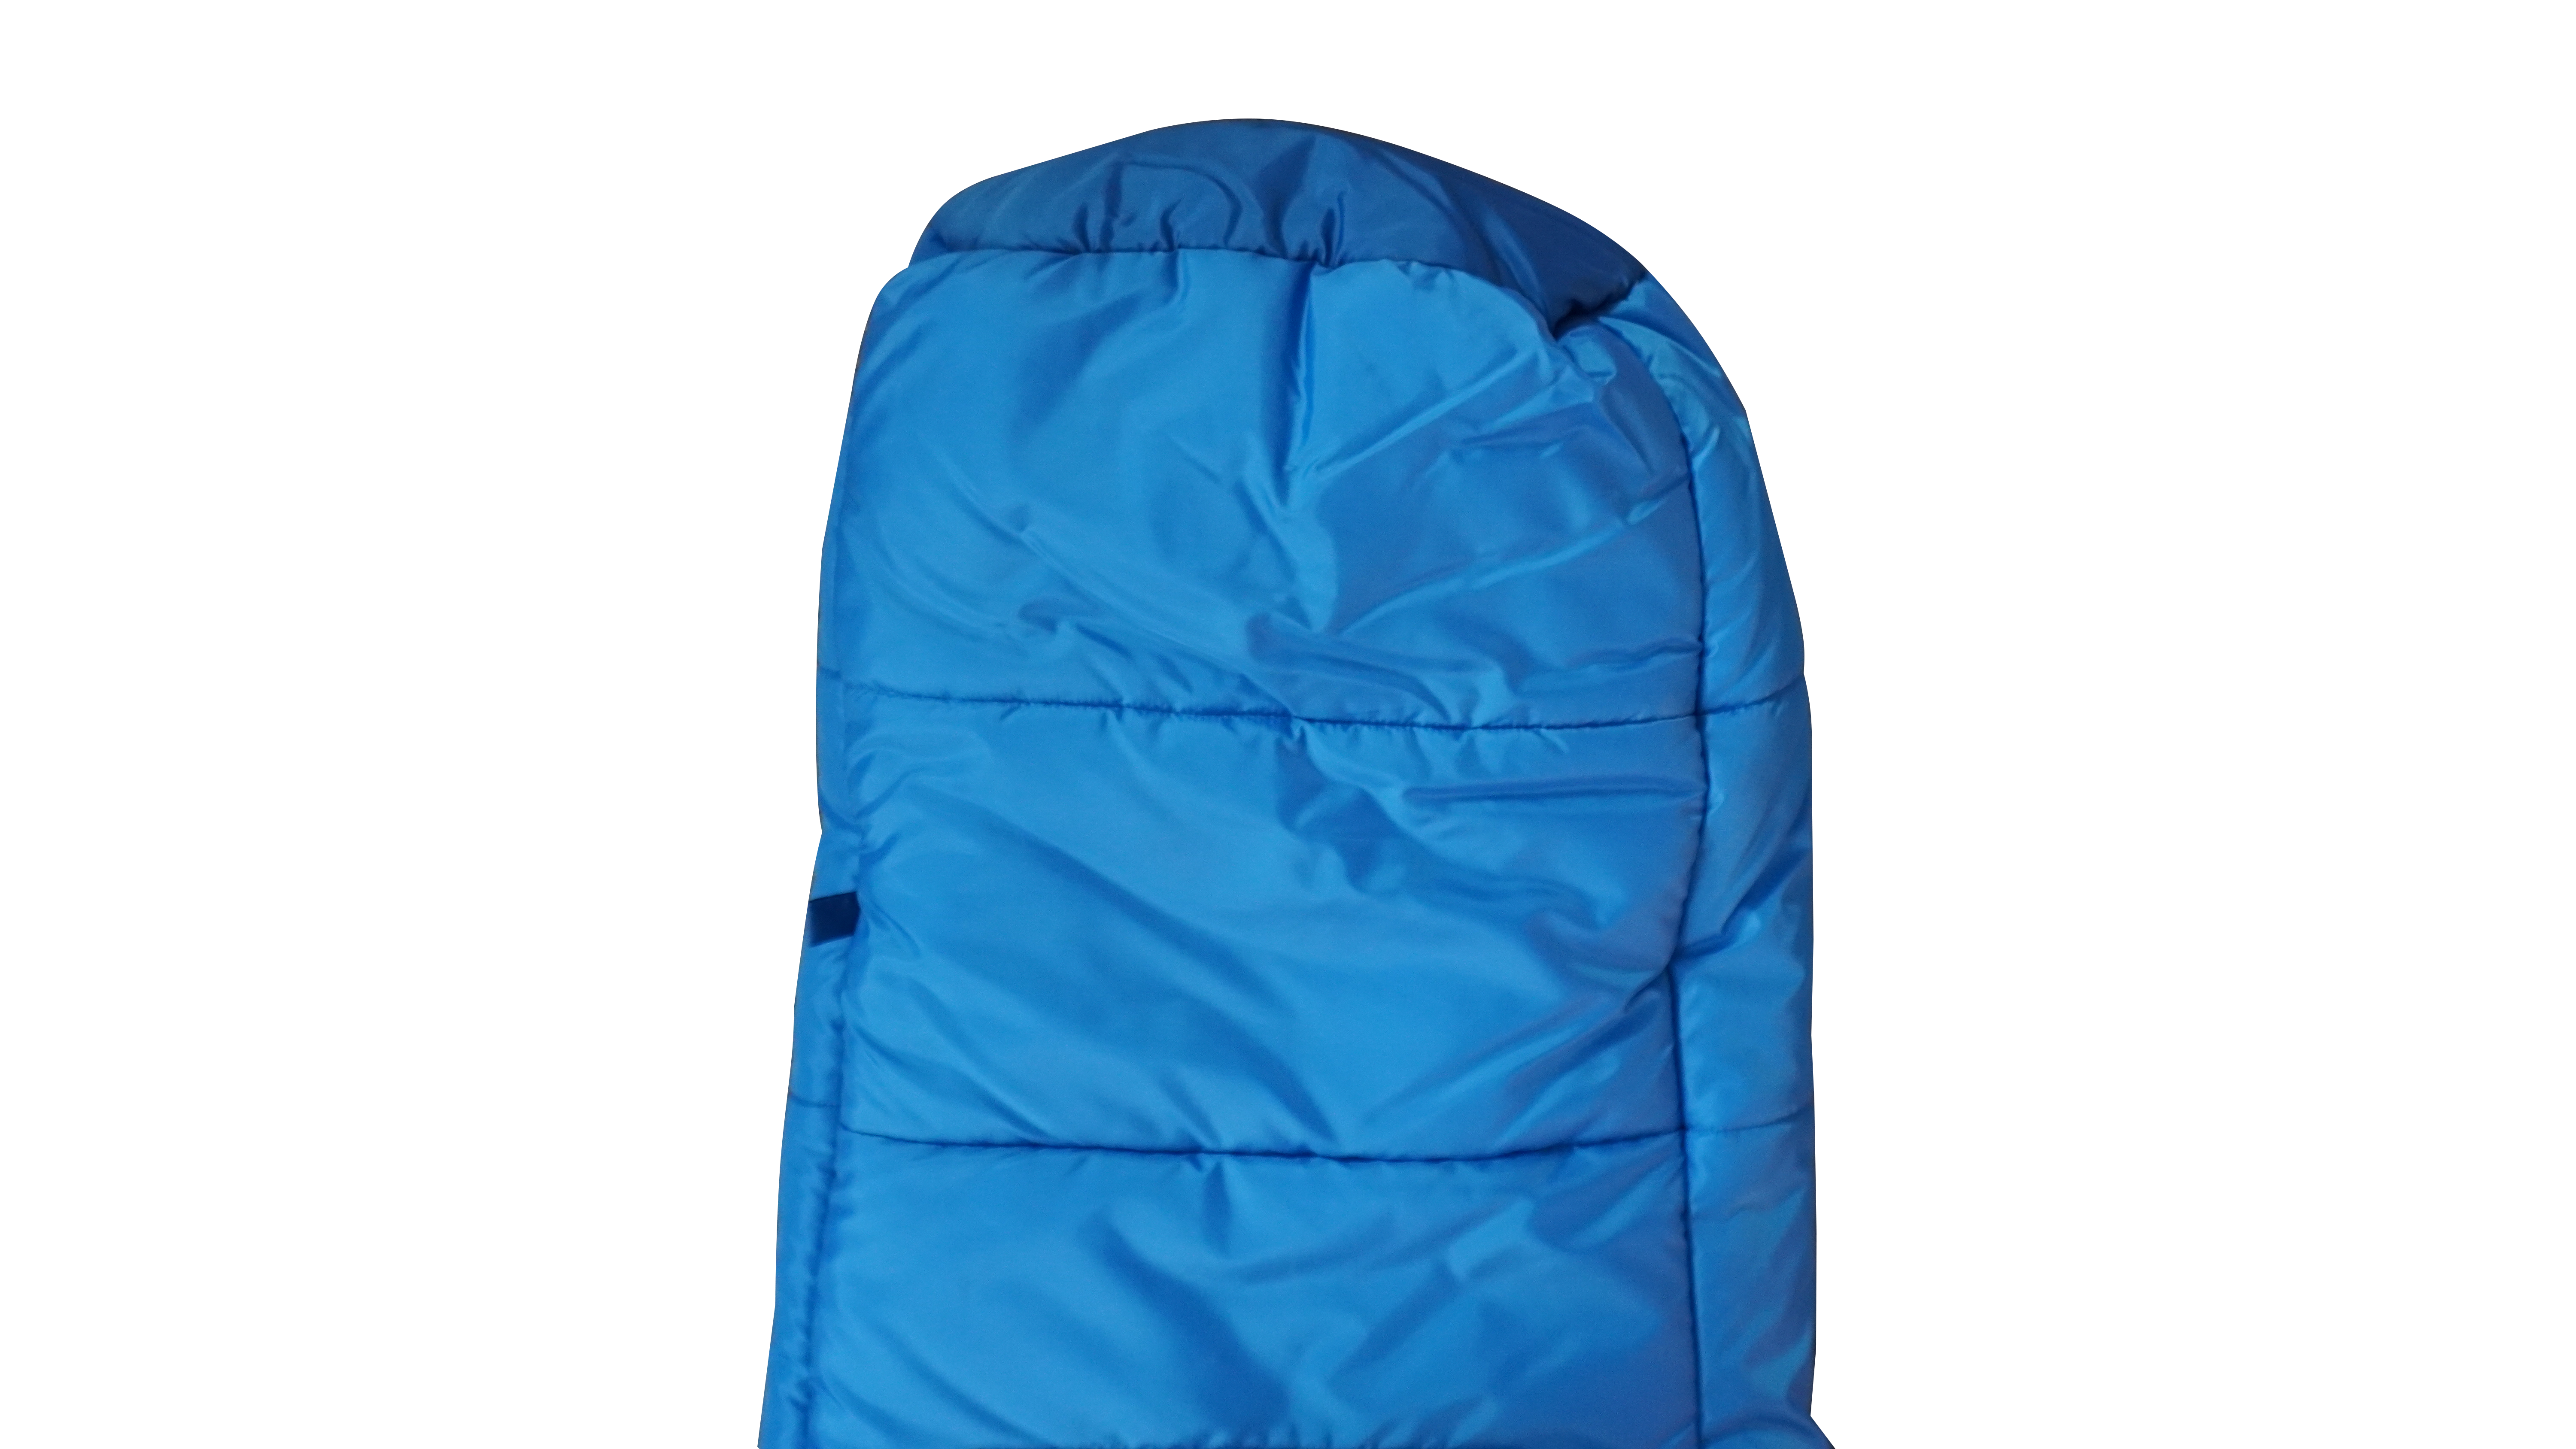 Blue Close-fitting Keep Warm Mummy Sleeping bag